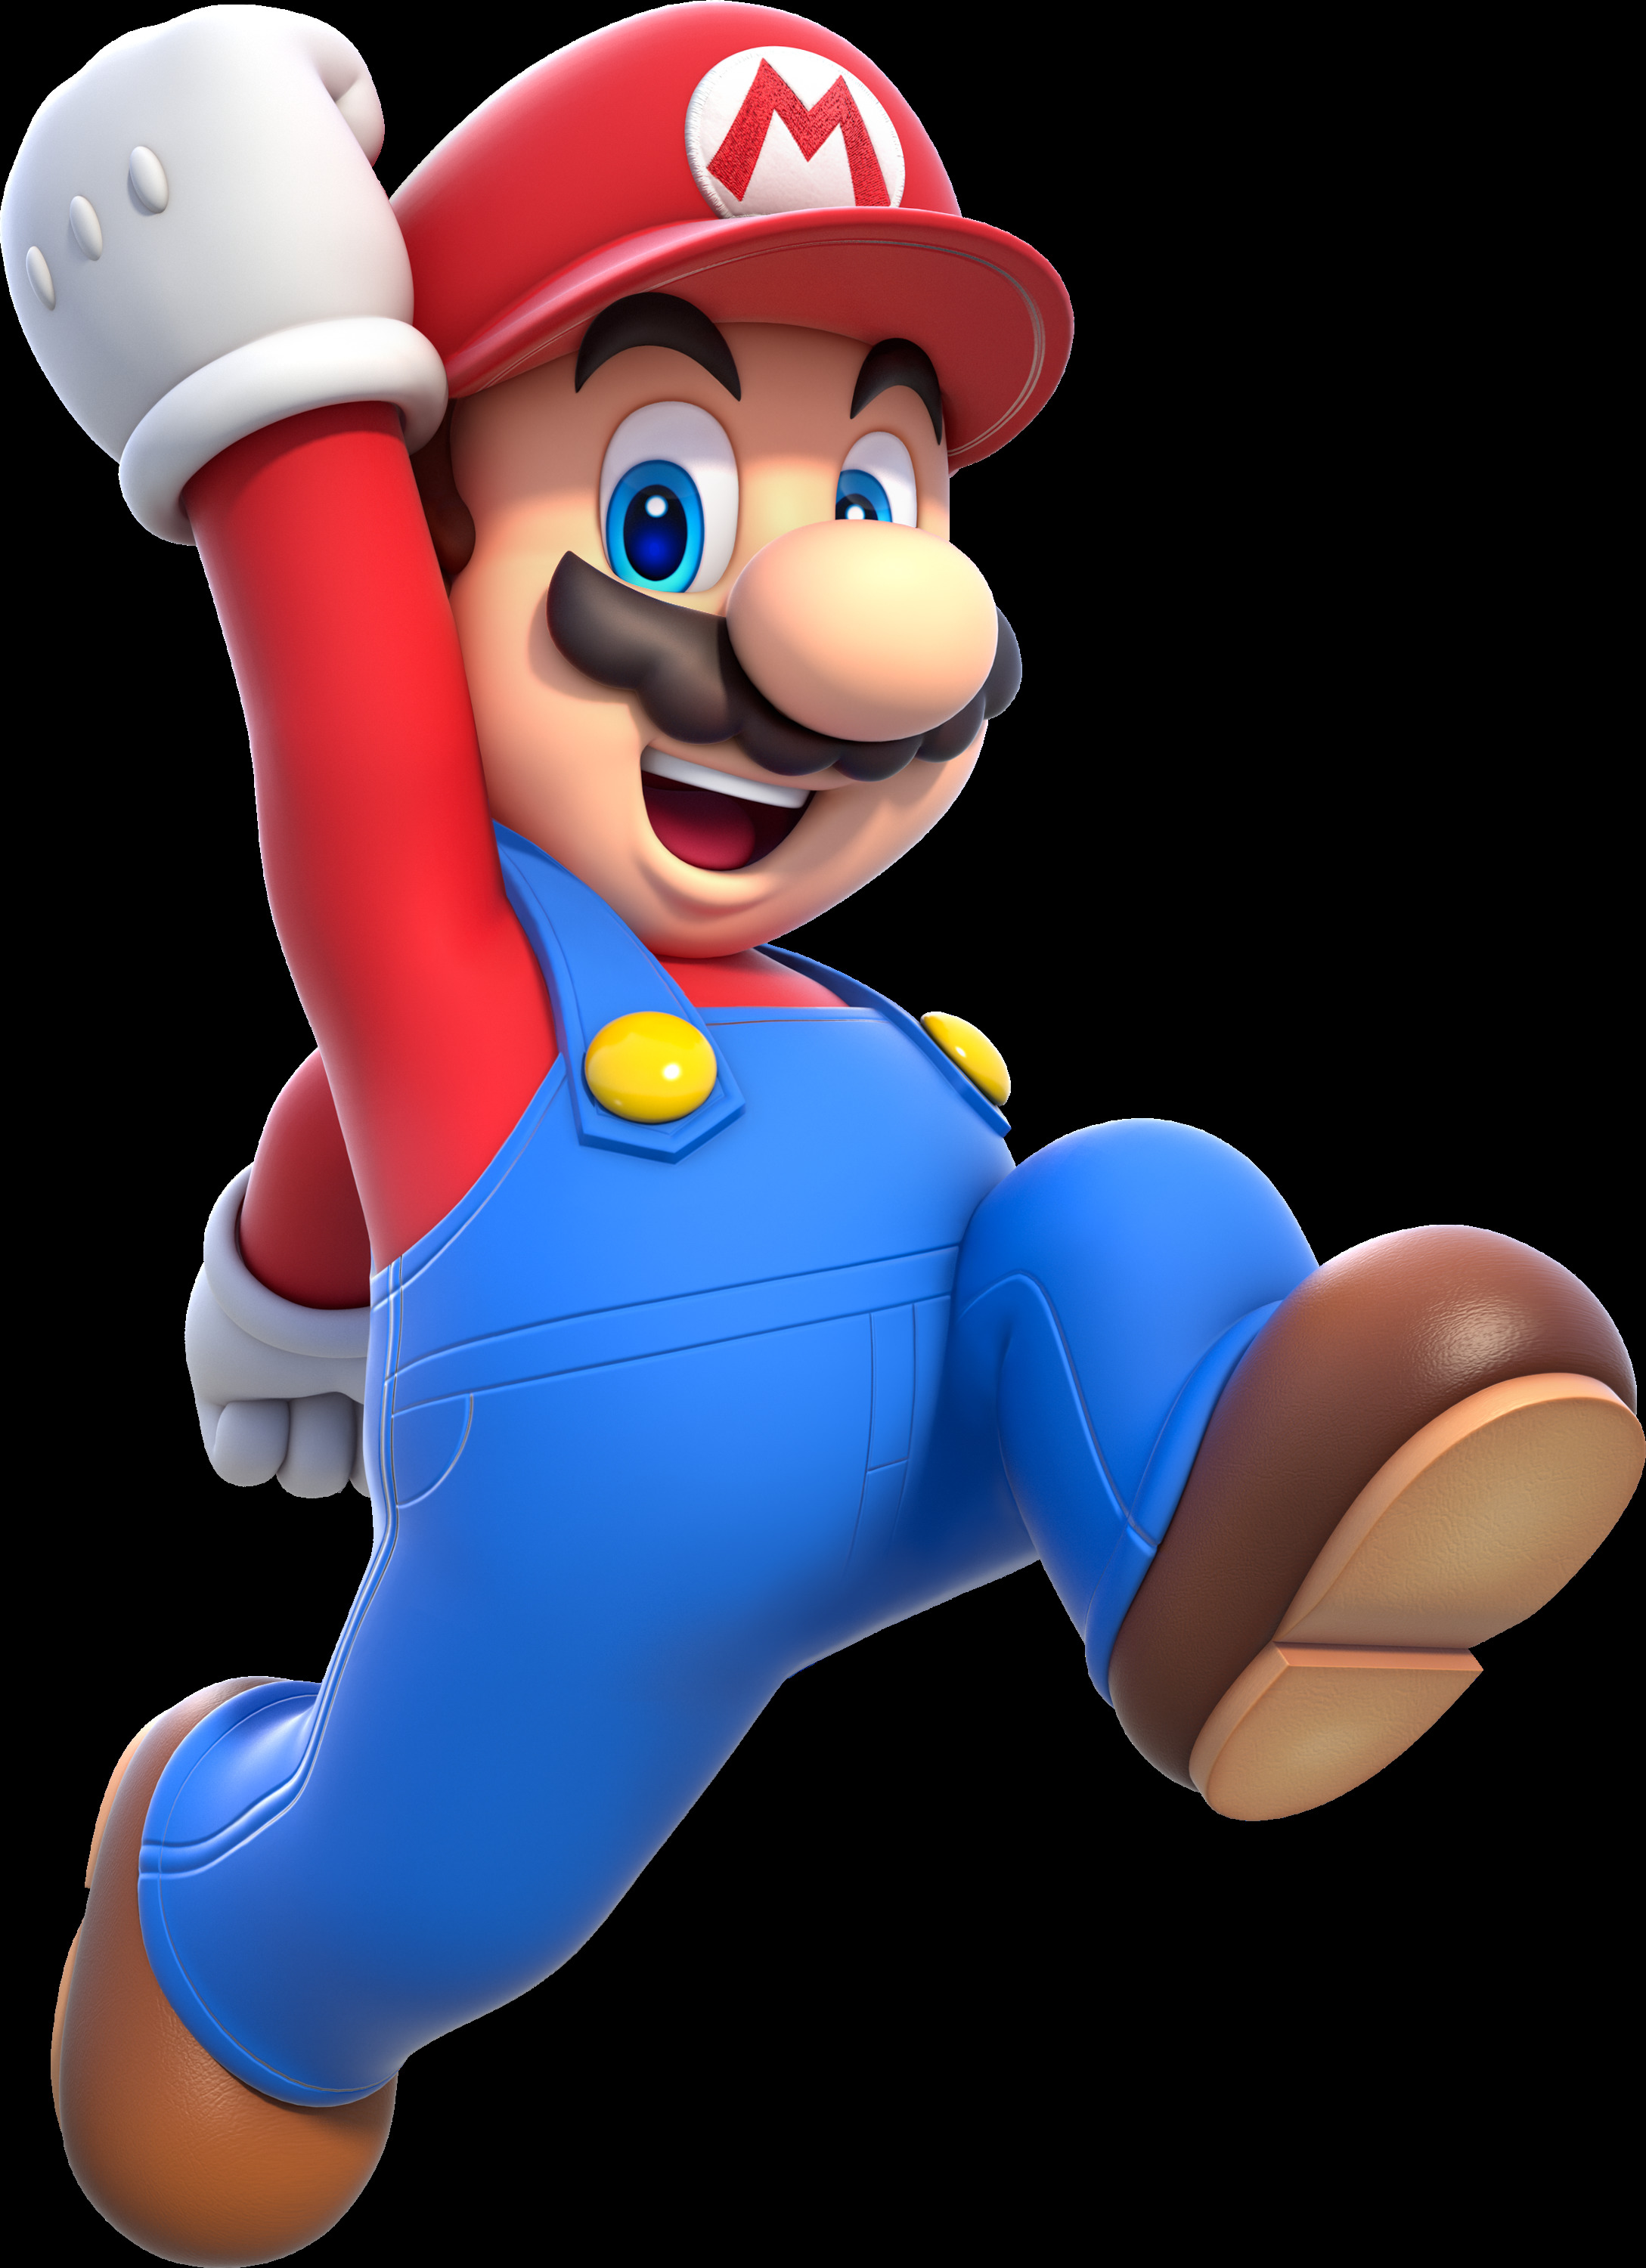 Nintendo's Shigeru Miyamoto On Super Mario Run for iPhone